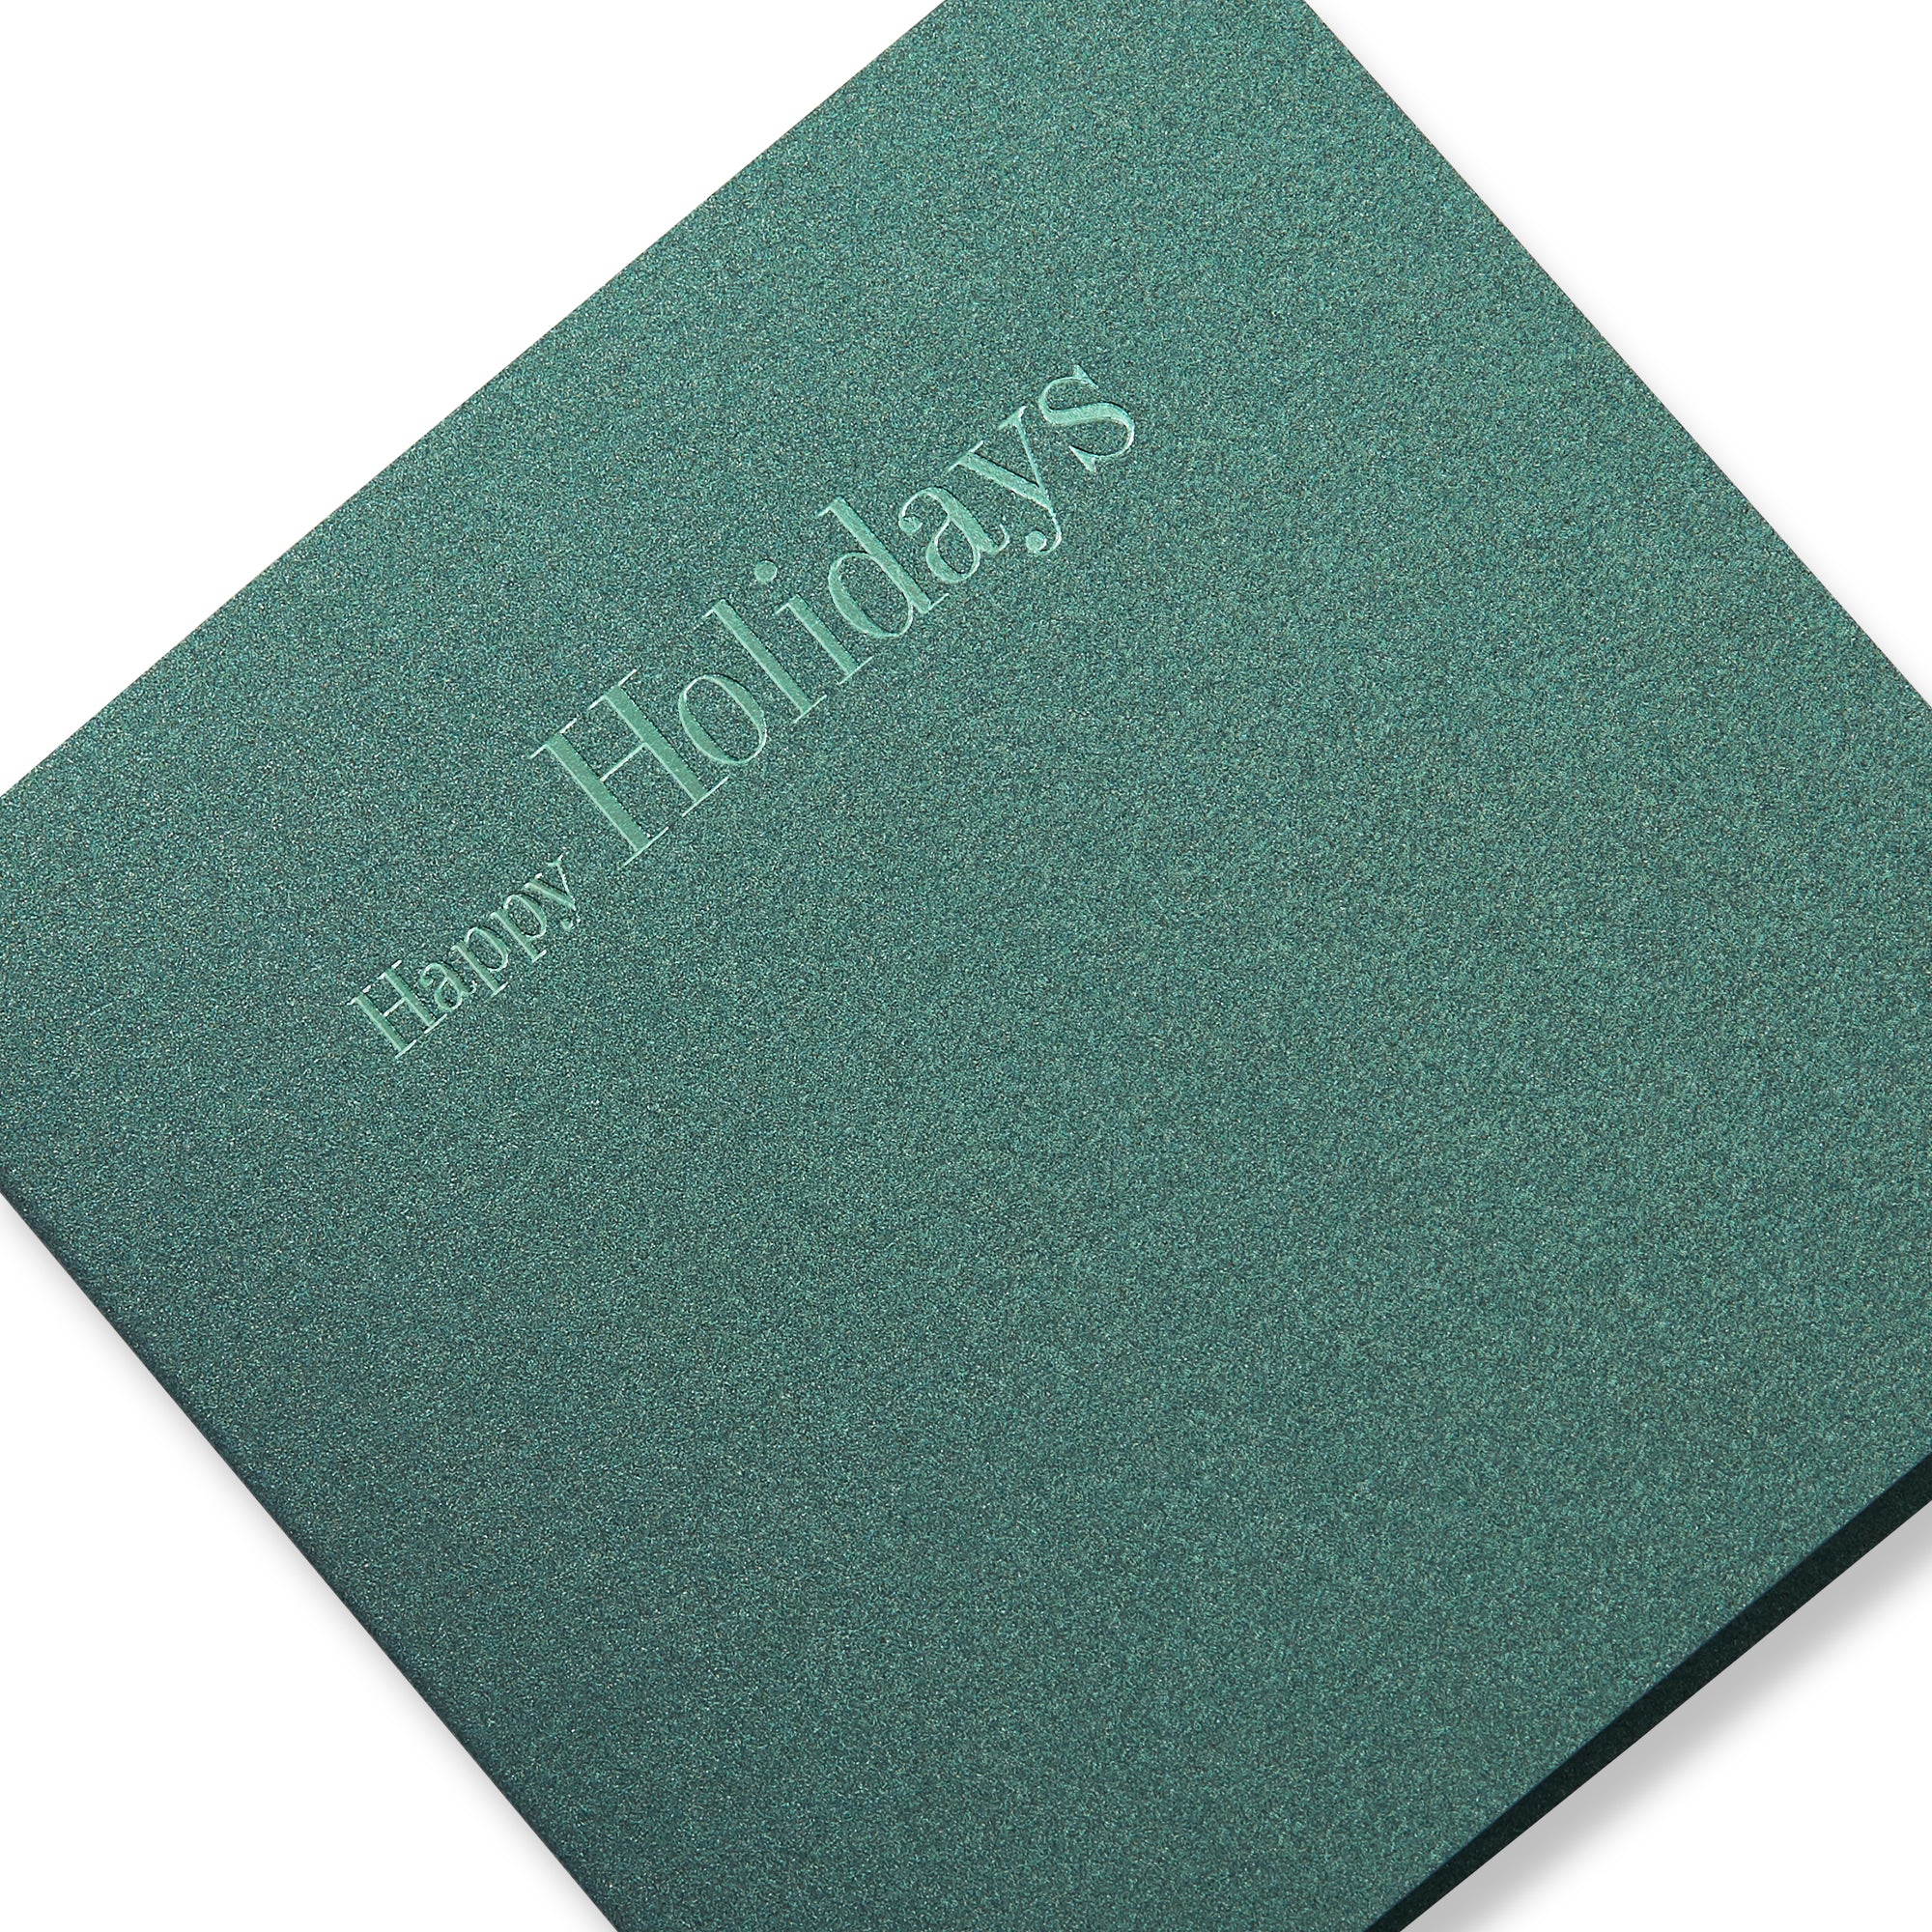 Happy Holidays Mini Cards-Story of Elegance